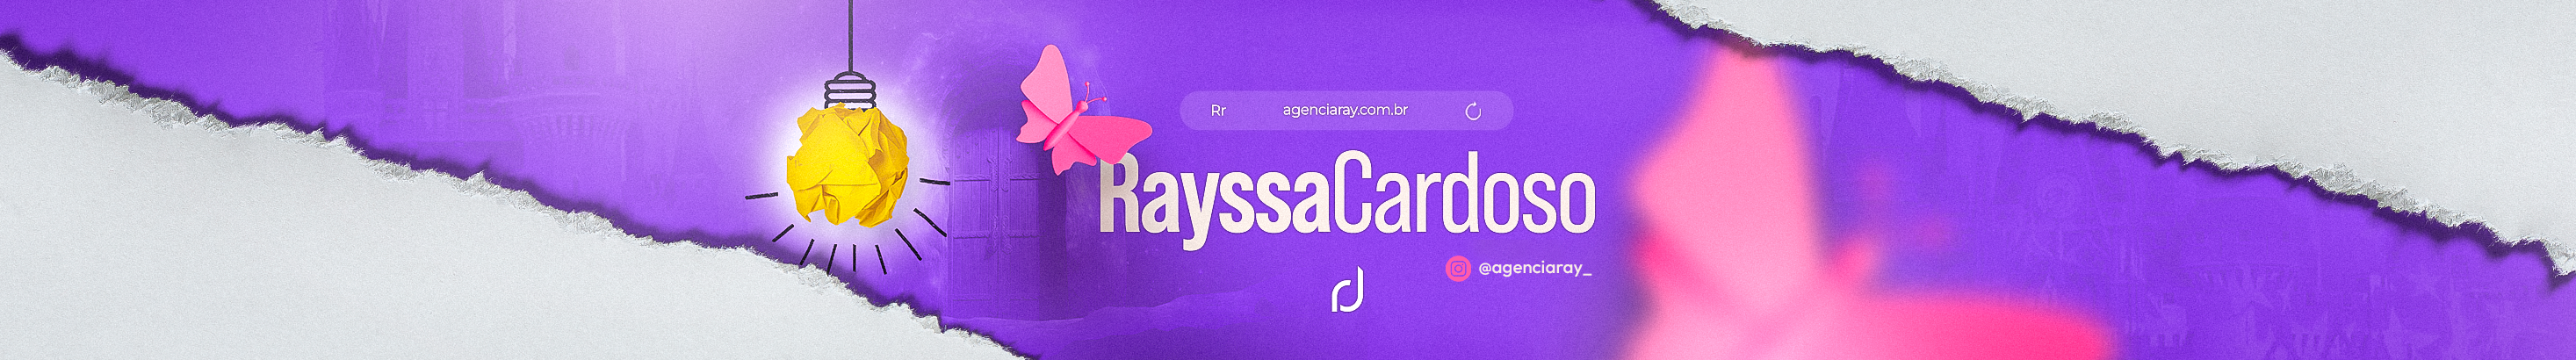 Rayssa Cardosos profilbanner